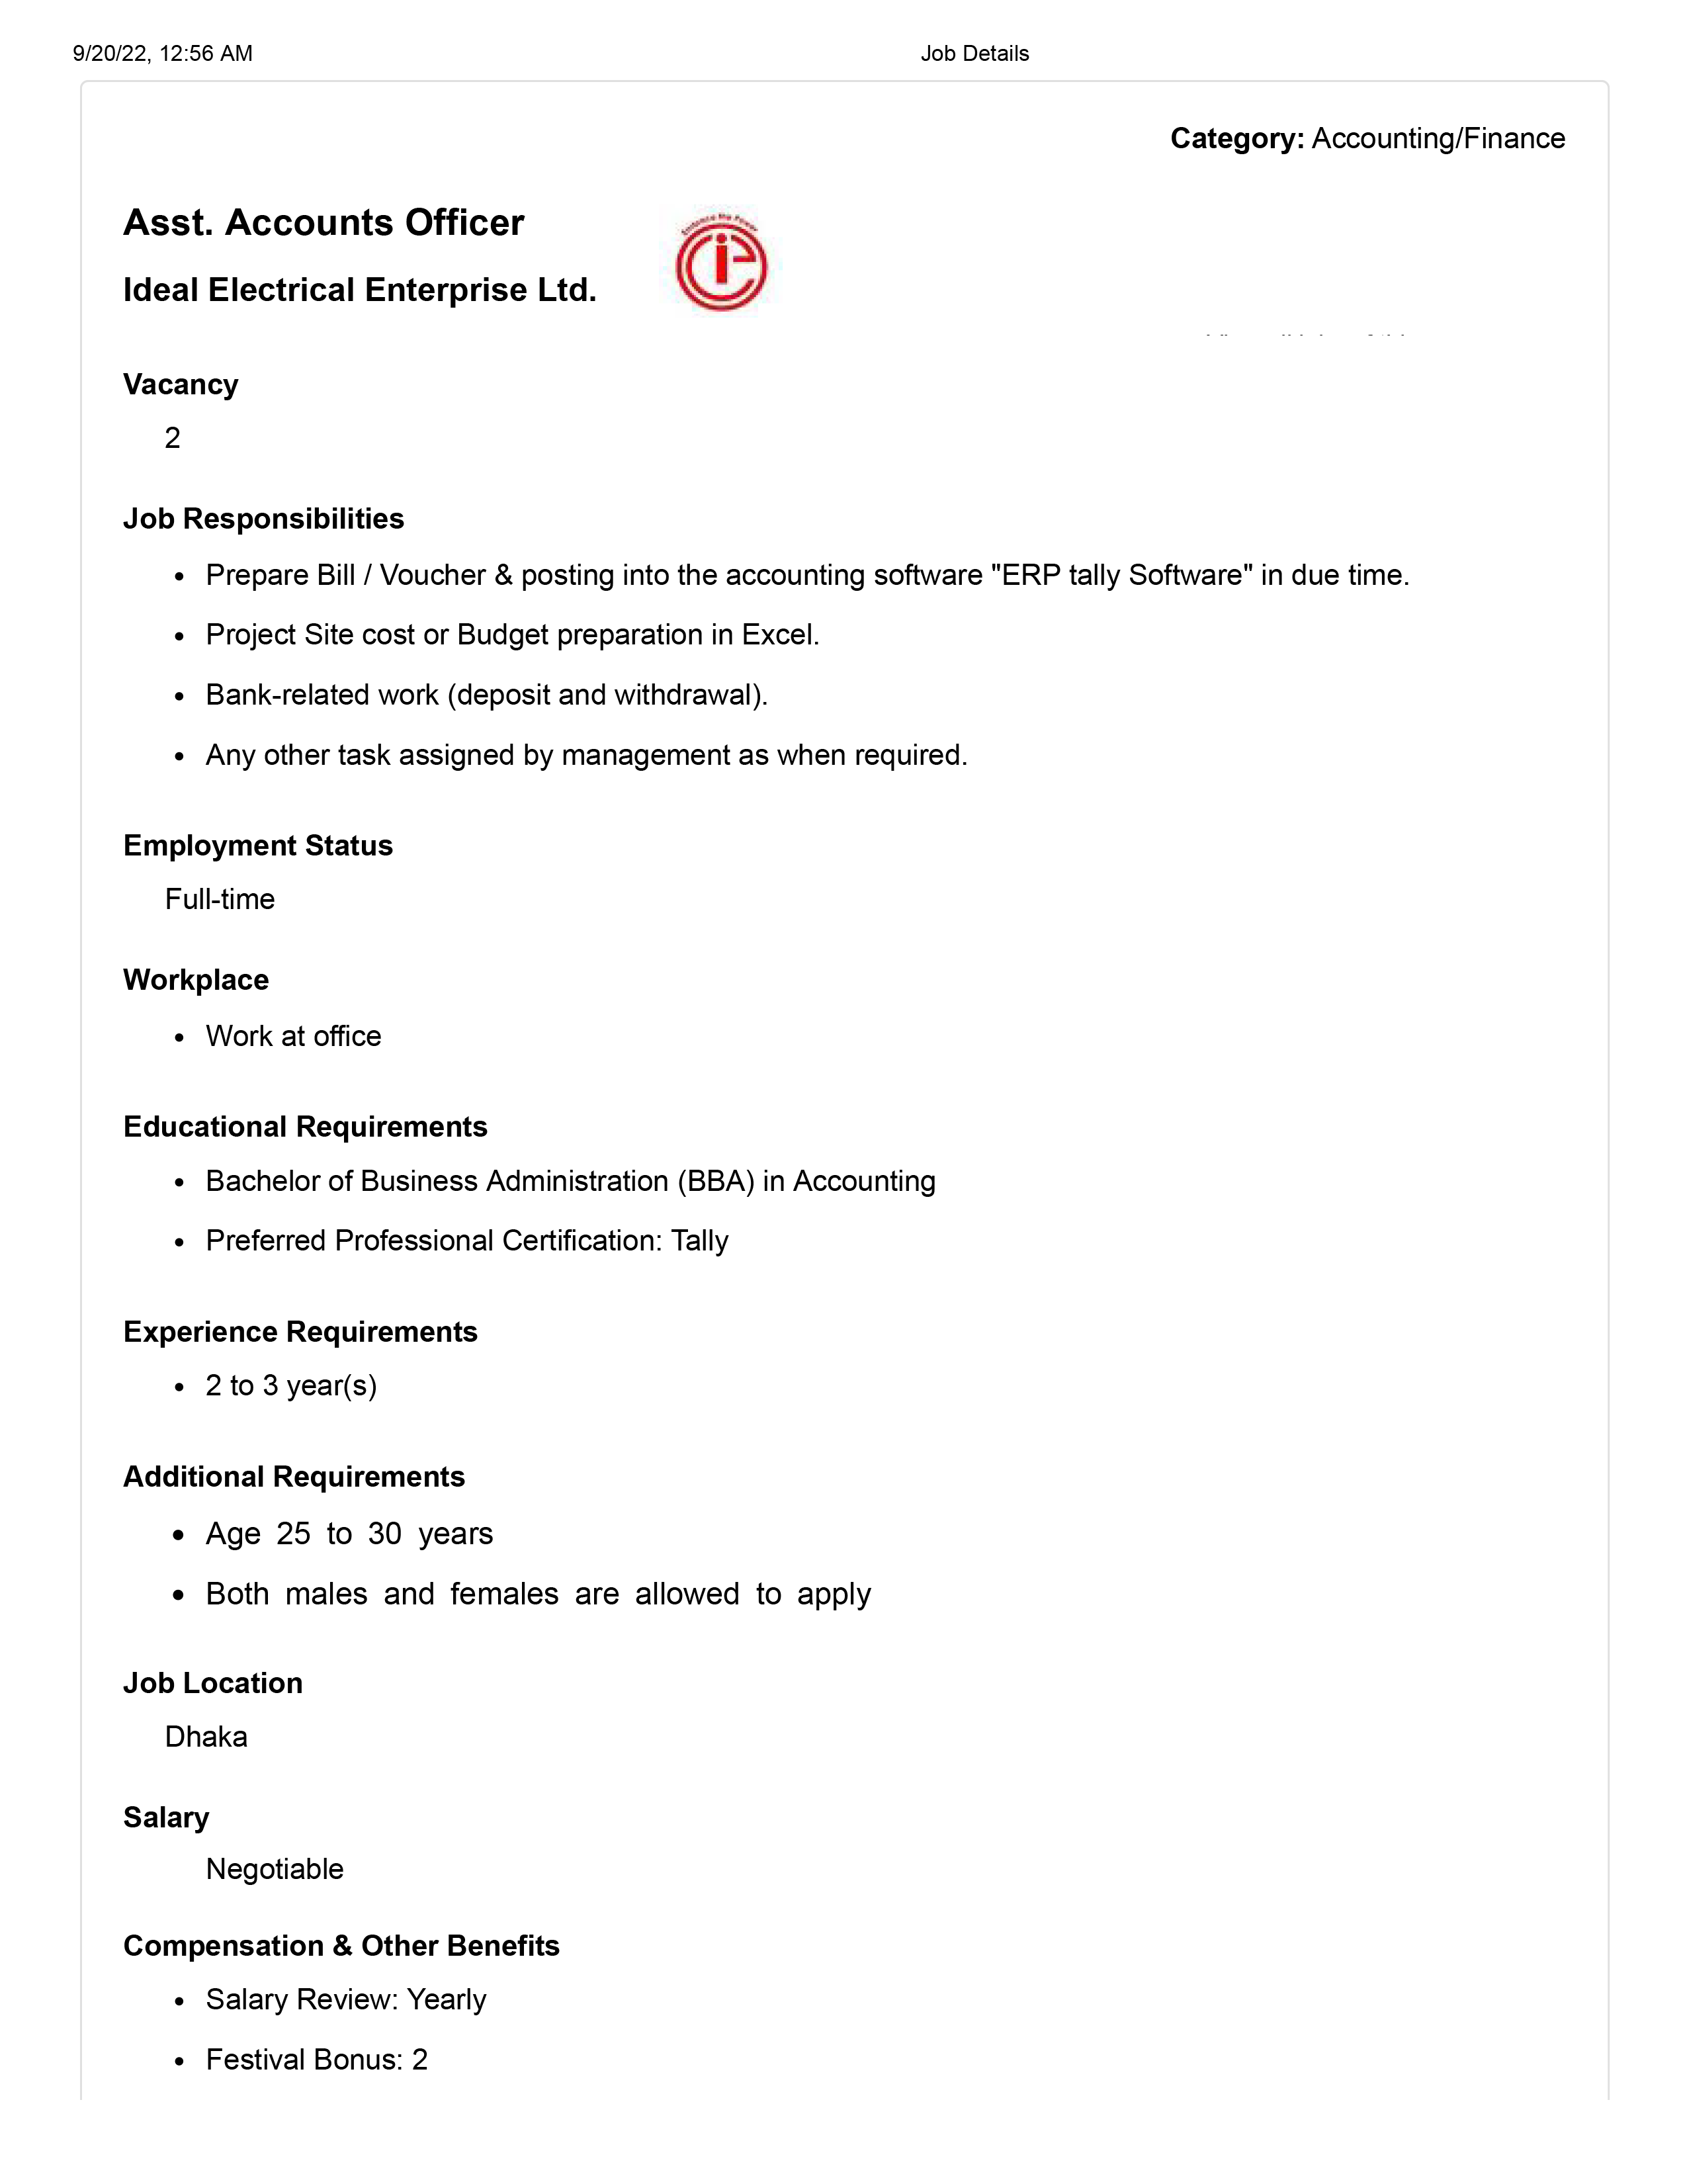 Ideal Electrical Enterprise Ltd. Job Circular